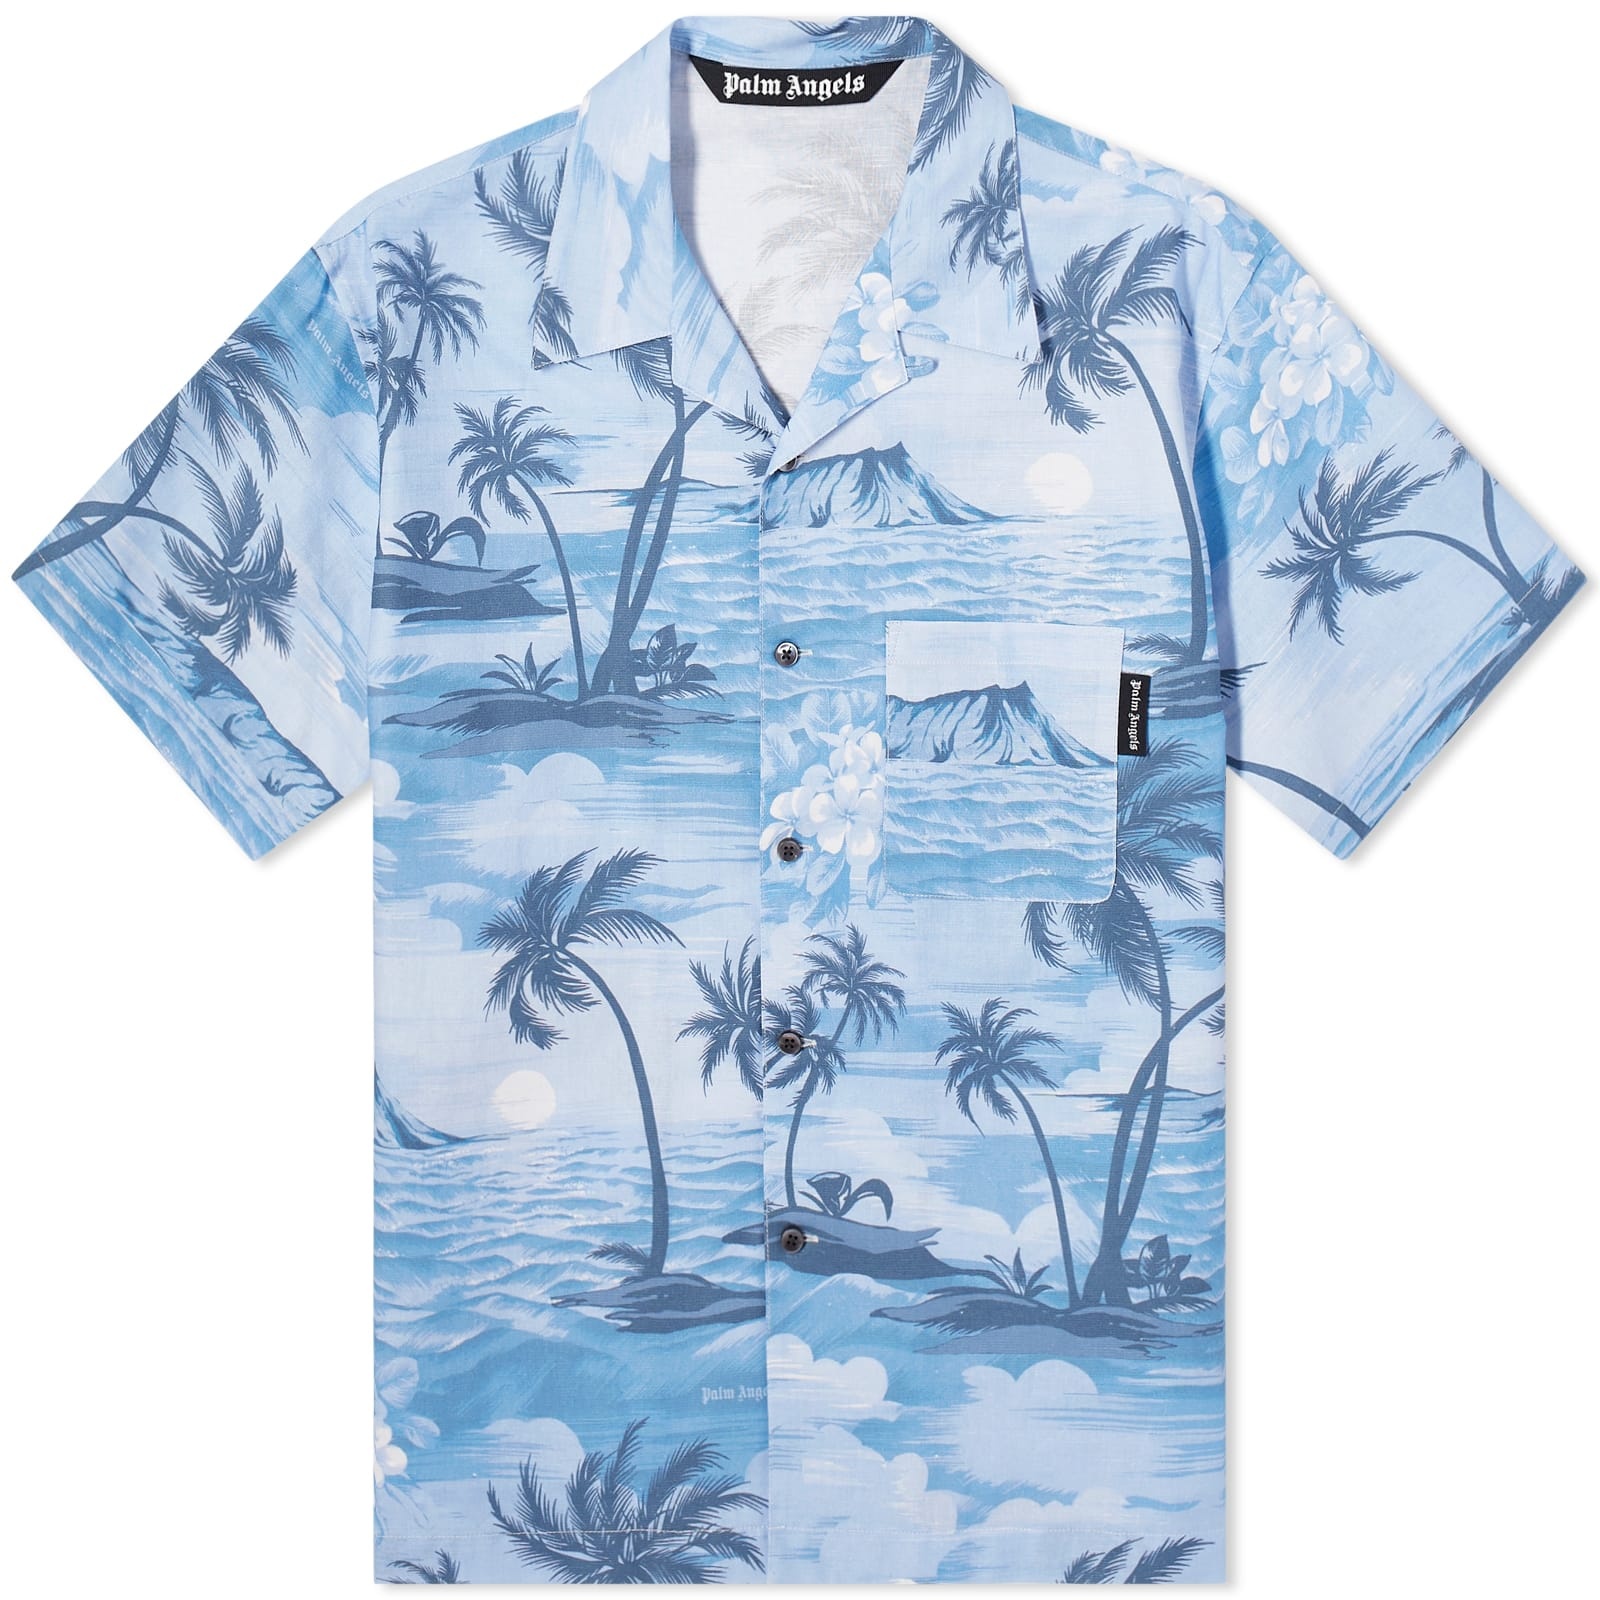 Palm Angels Sunset Vacation Shirt - 1